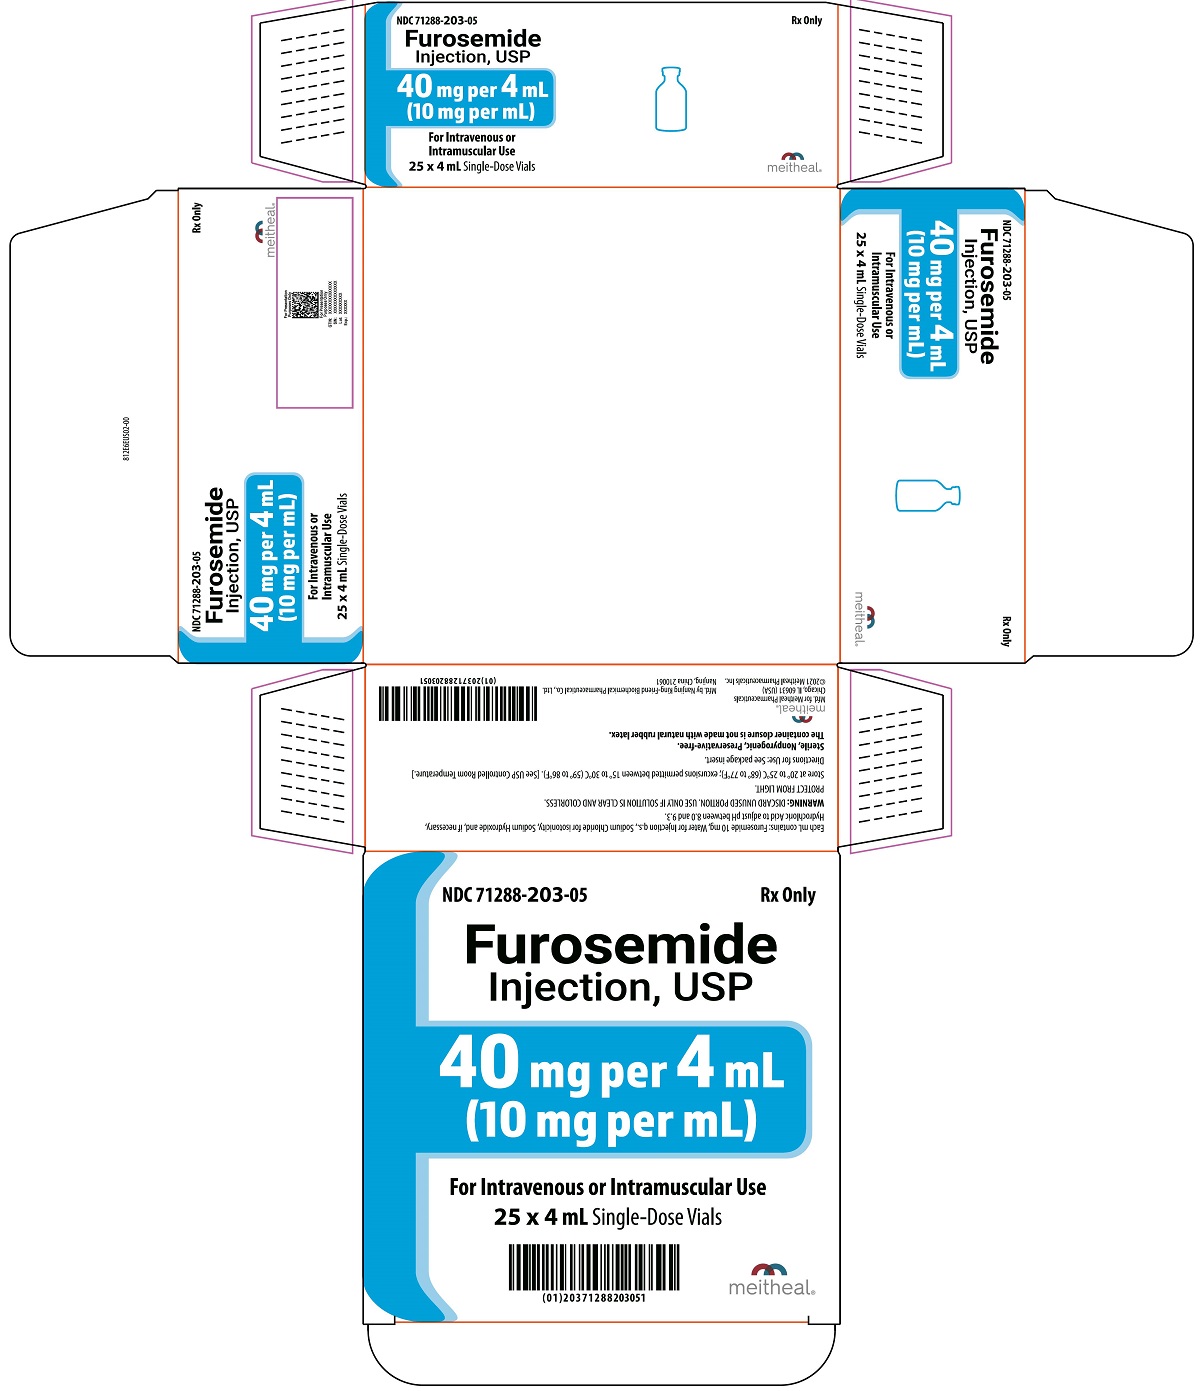 PRINCIPAL DISPLAY PANEL – Furosemide Injection, USP 40 mg per 4 mL Carton